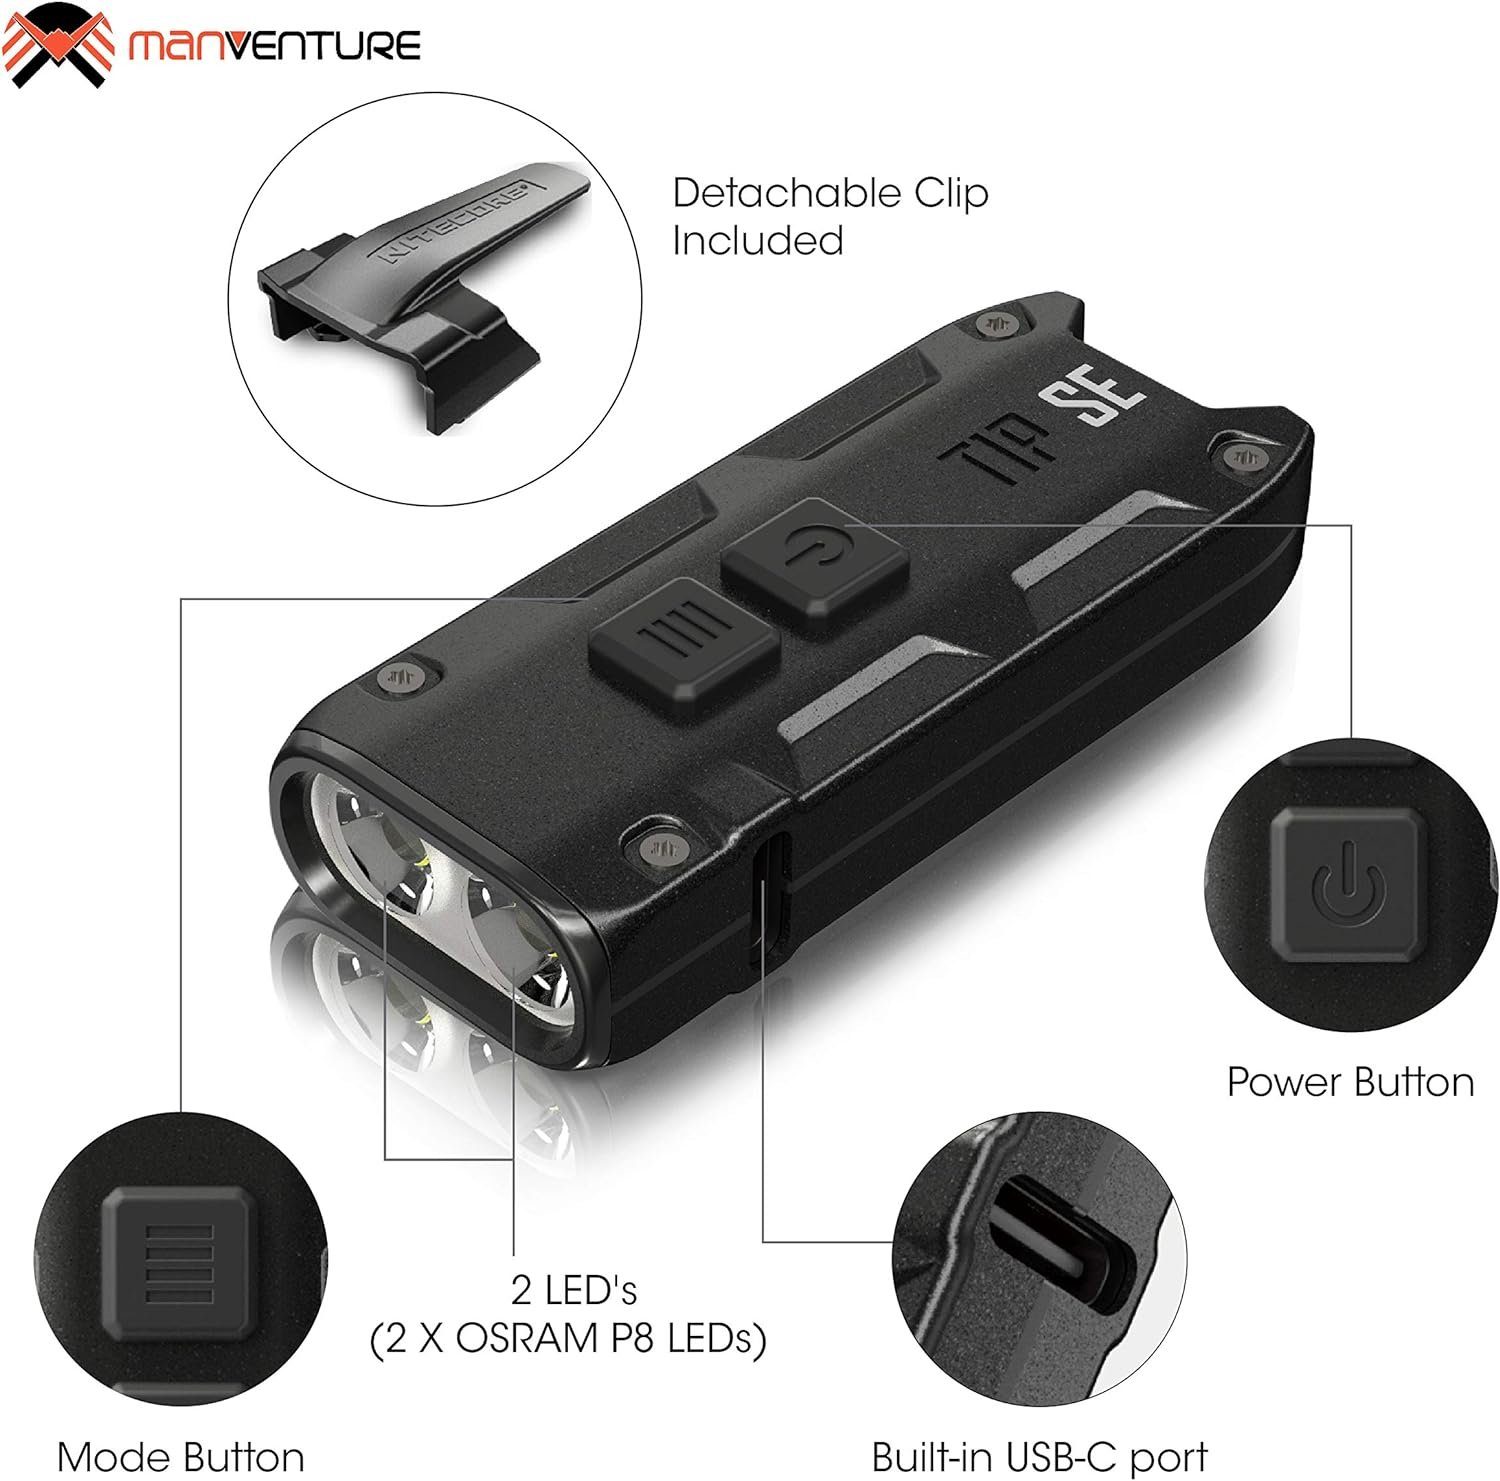 Taschenlampe (1-St) USB LED Tip – – 700 - LED Lumen C – SE Mini-Taschenlampe Schlüsselanhänger Nitecore